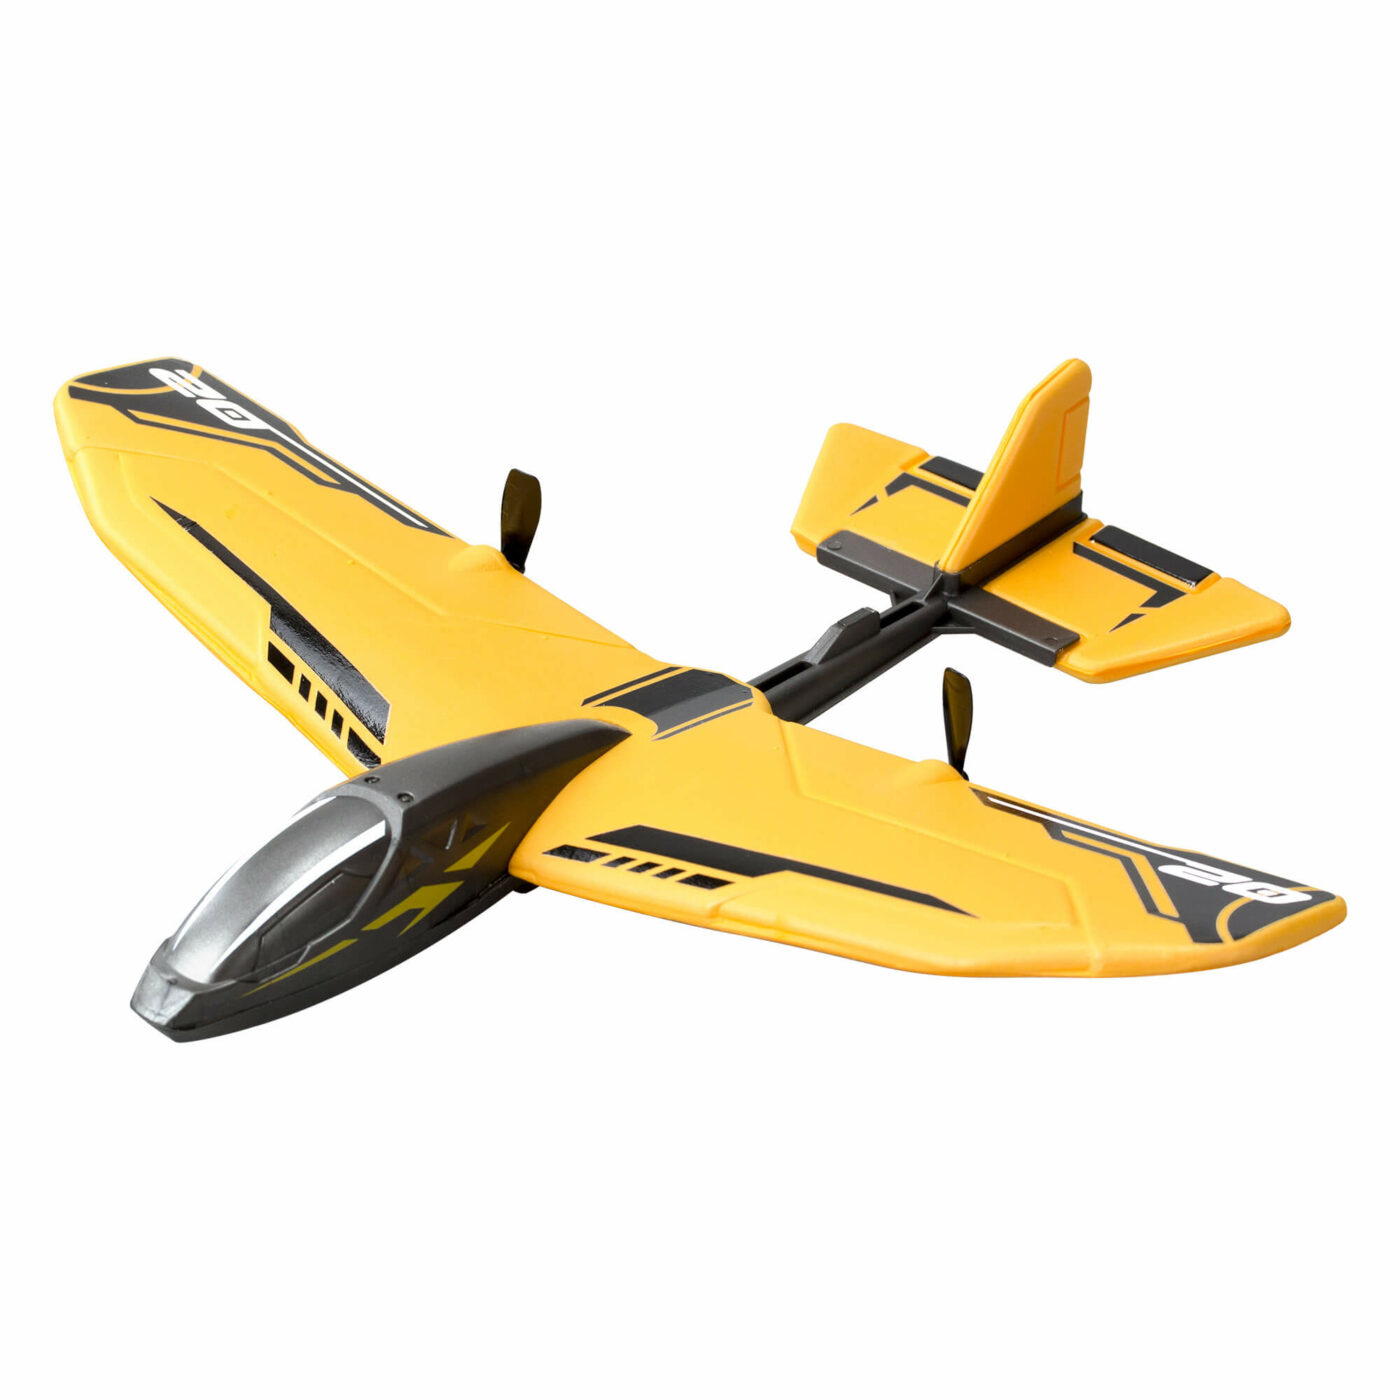 Silverlit Flybotic Hornet Evo - Radio Controlled Plane